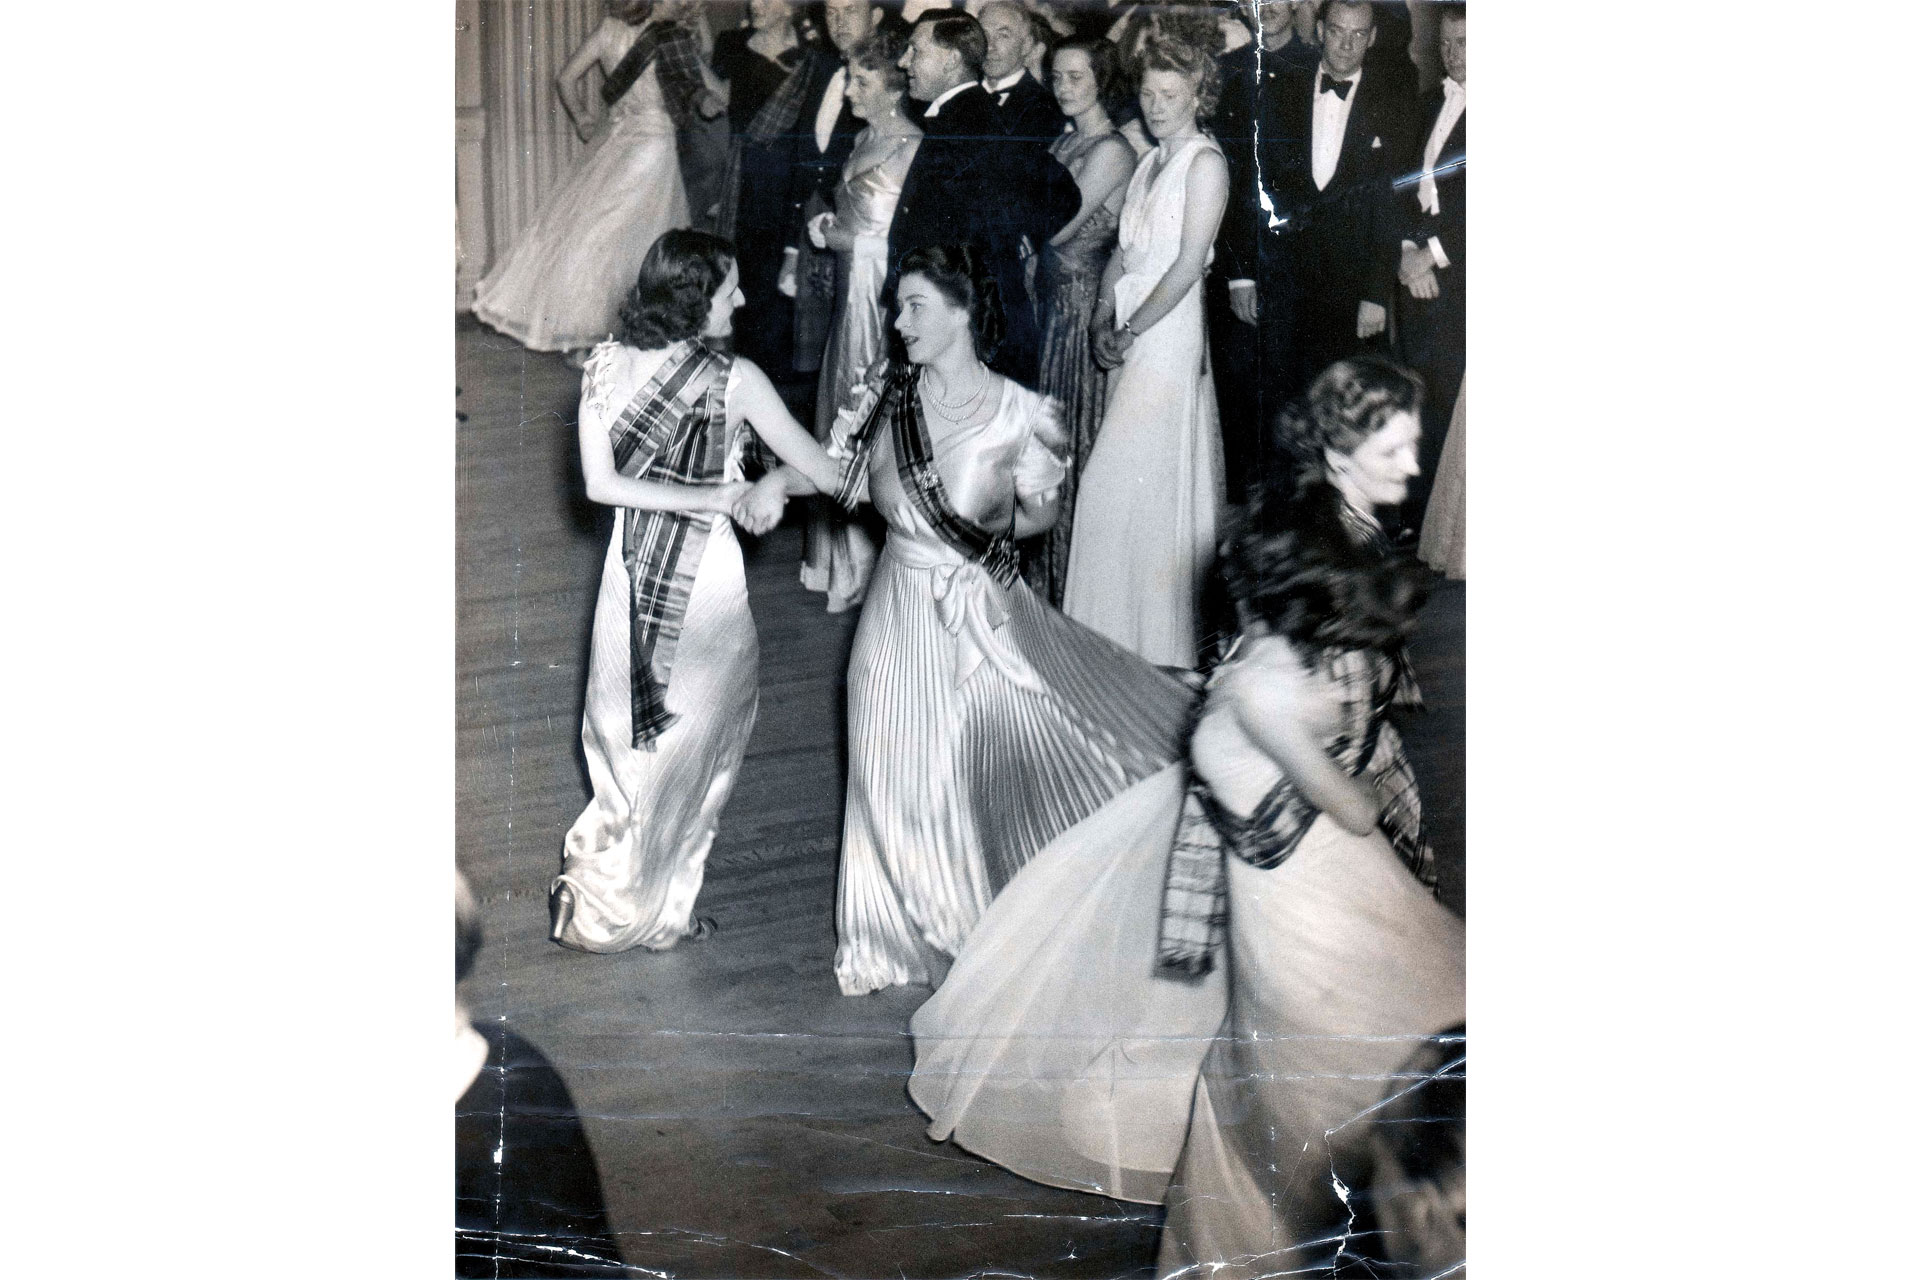 Queen Elizabeth II at a ball